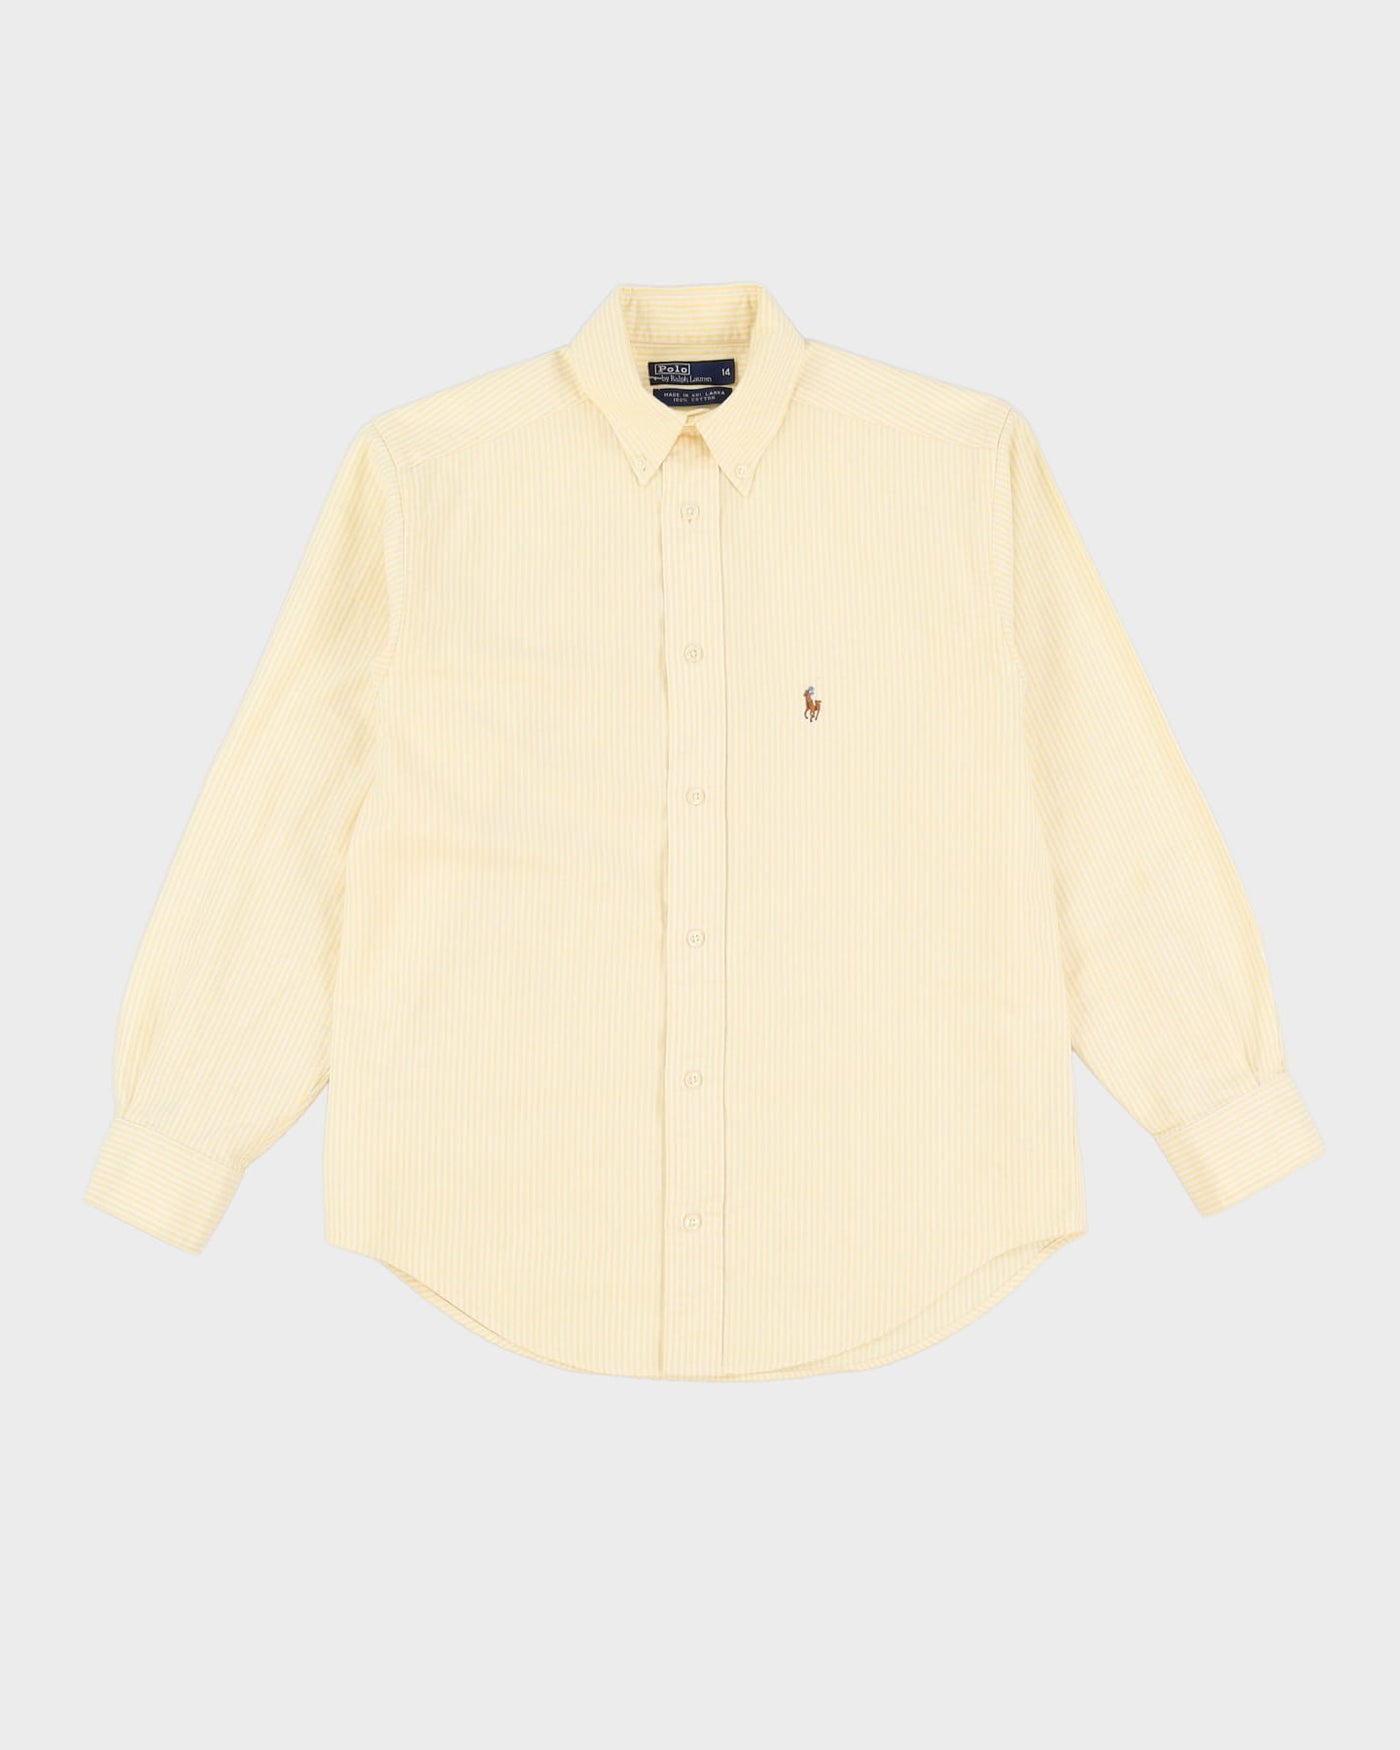 Vintage 90s Ralph Lauren Yellow Stripe Patterned Button Up Long Sleeve Shirt - S